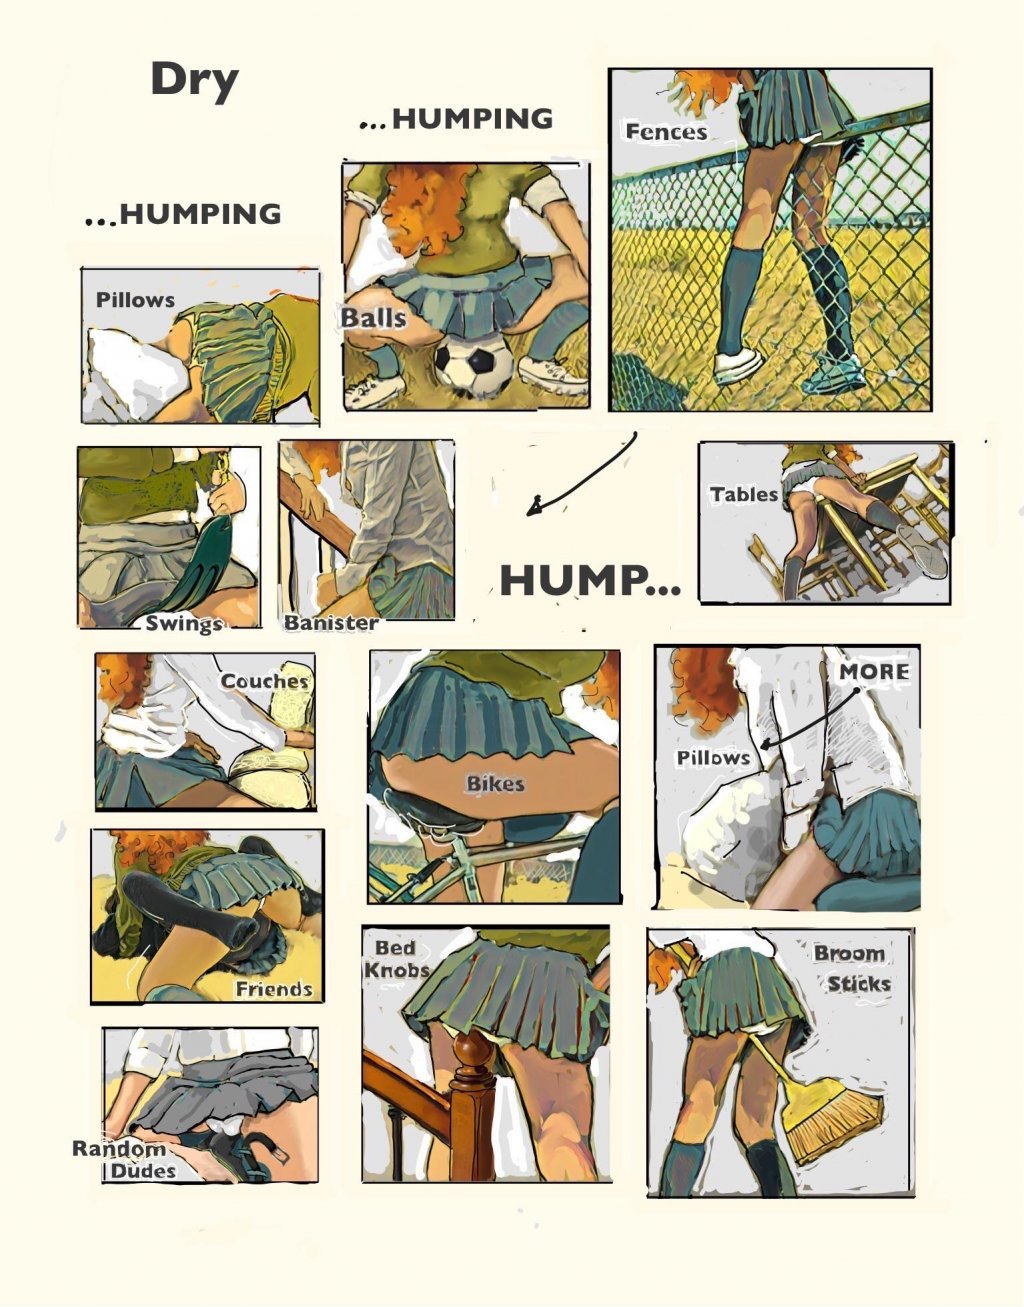 Dry humping comics